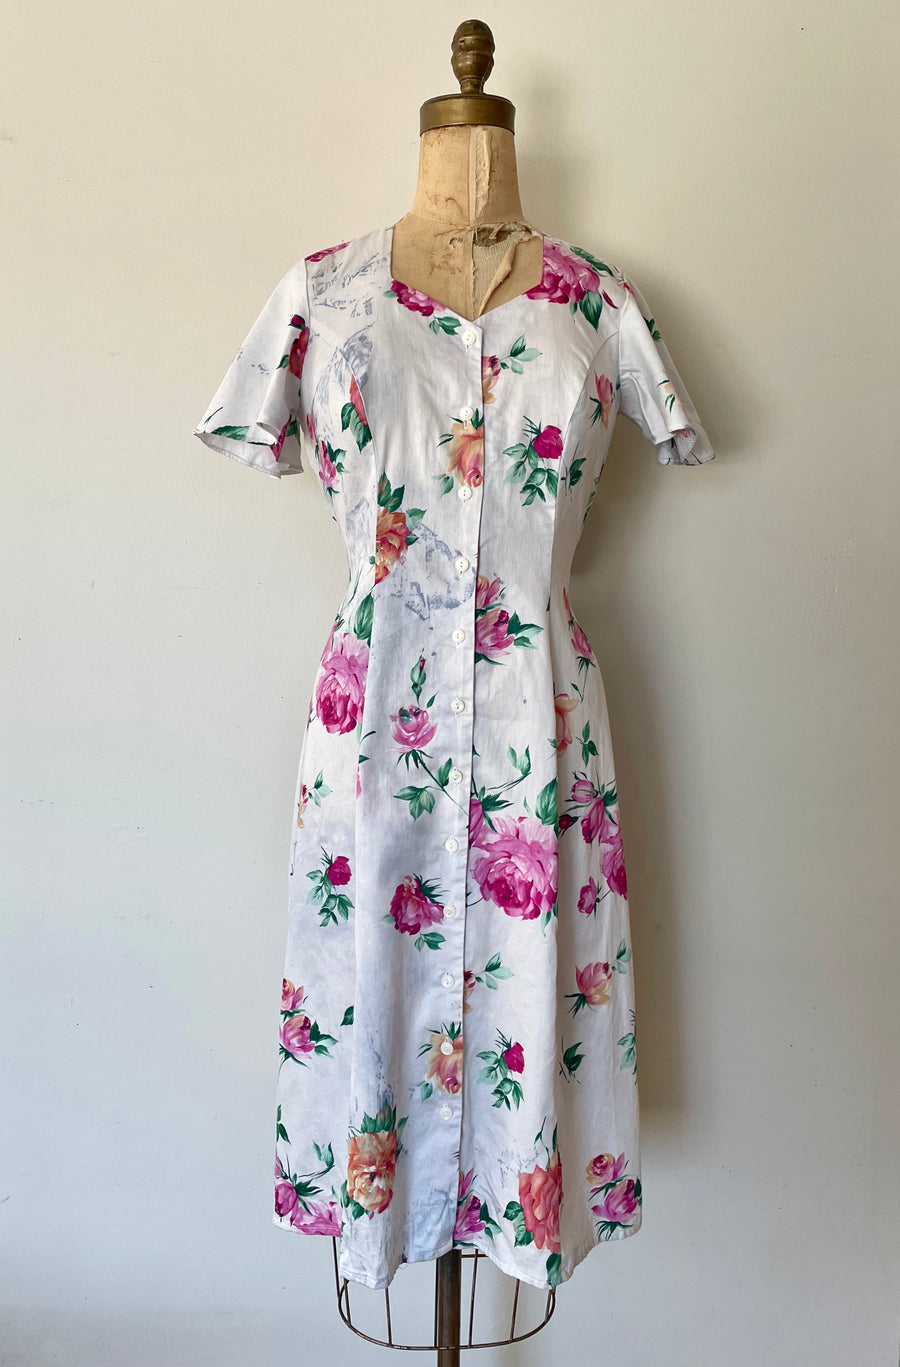 90's Cotton Rose Dress - Size M